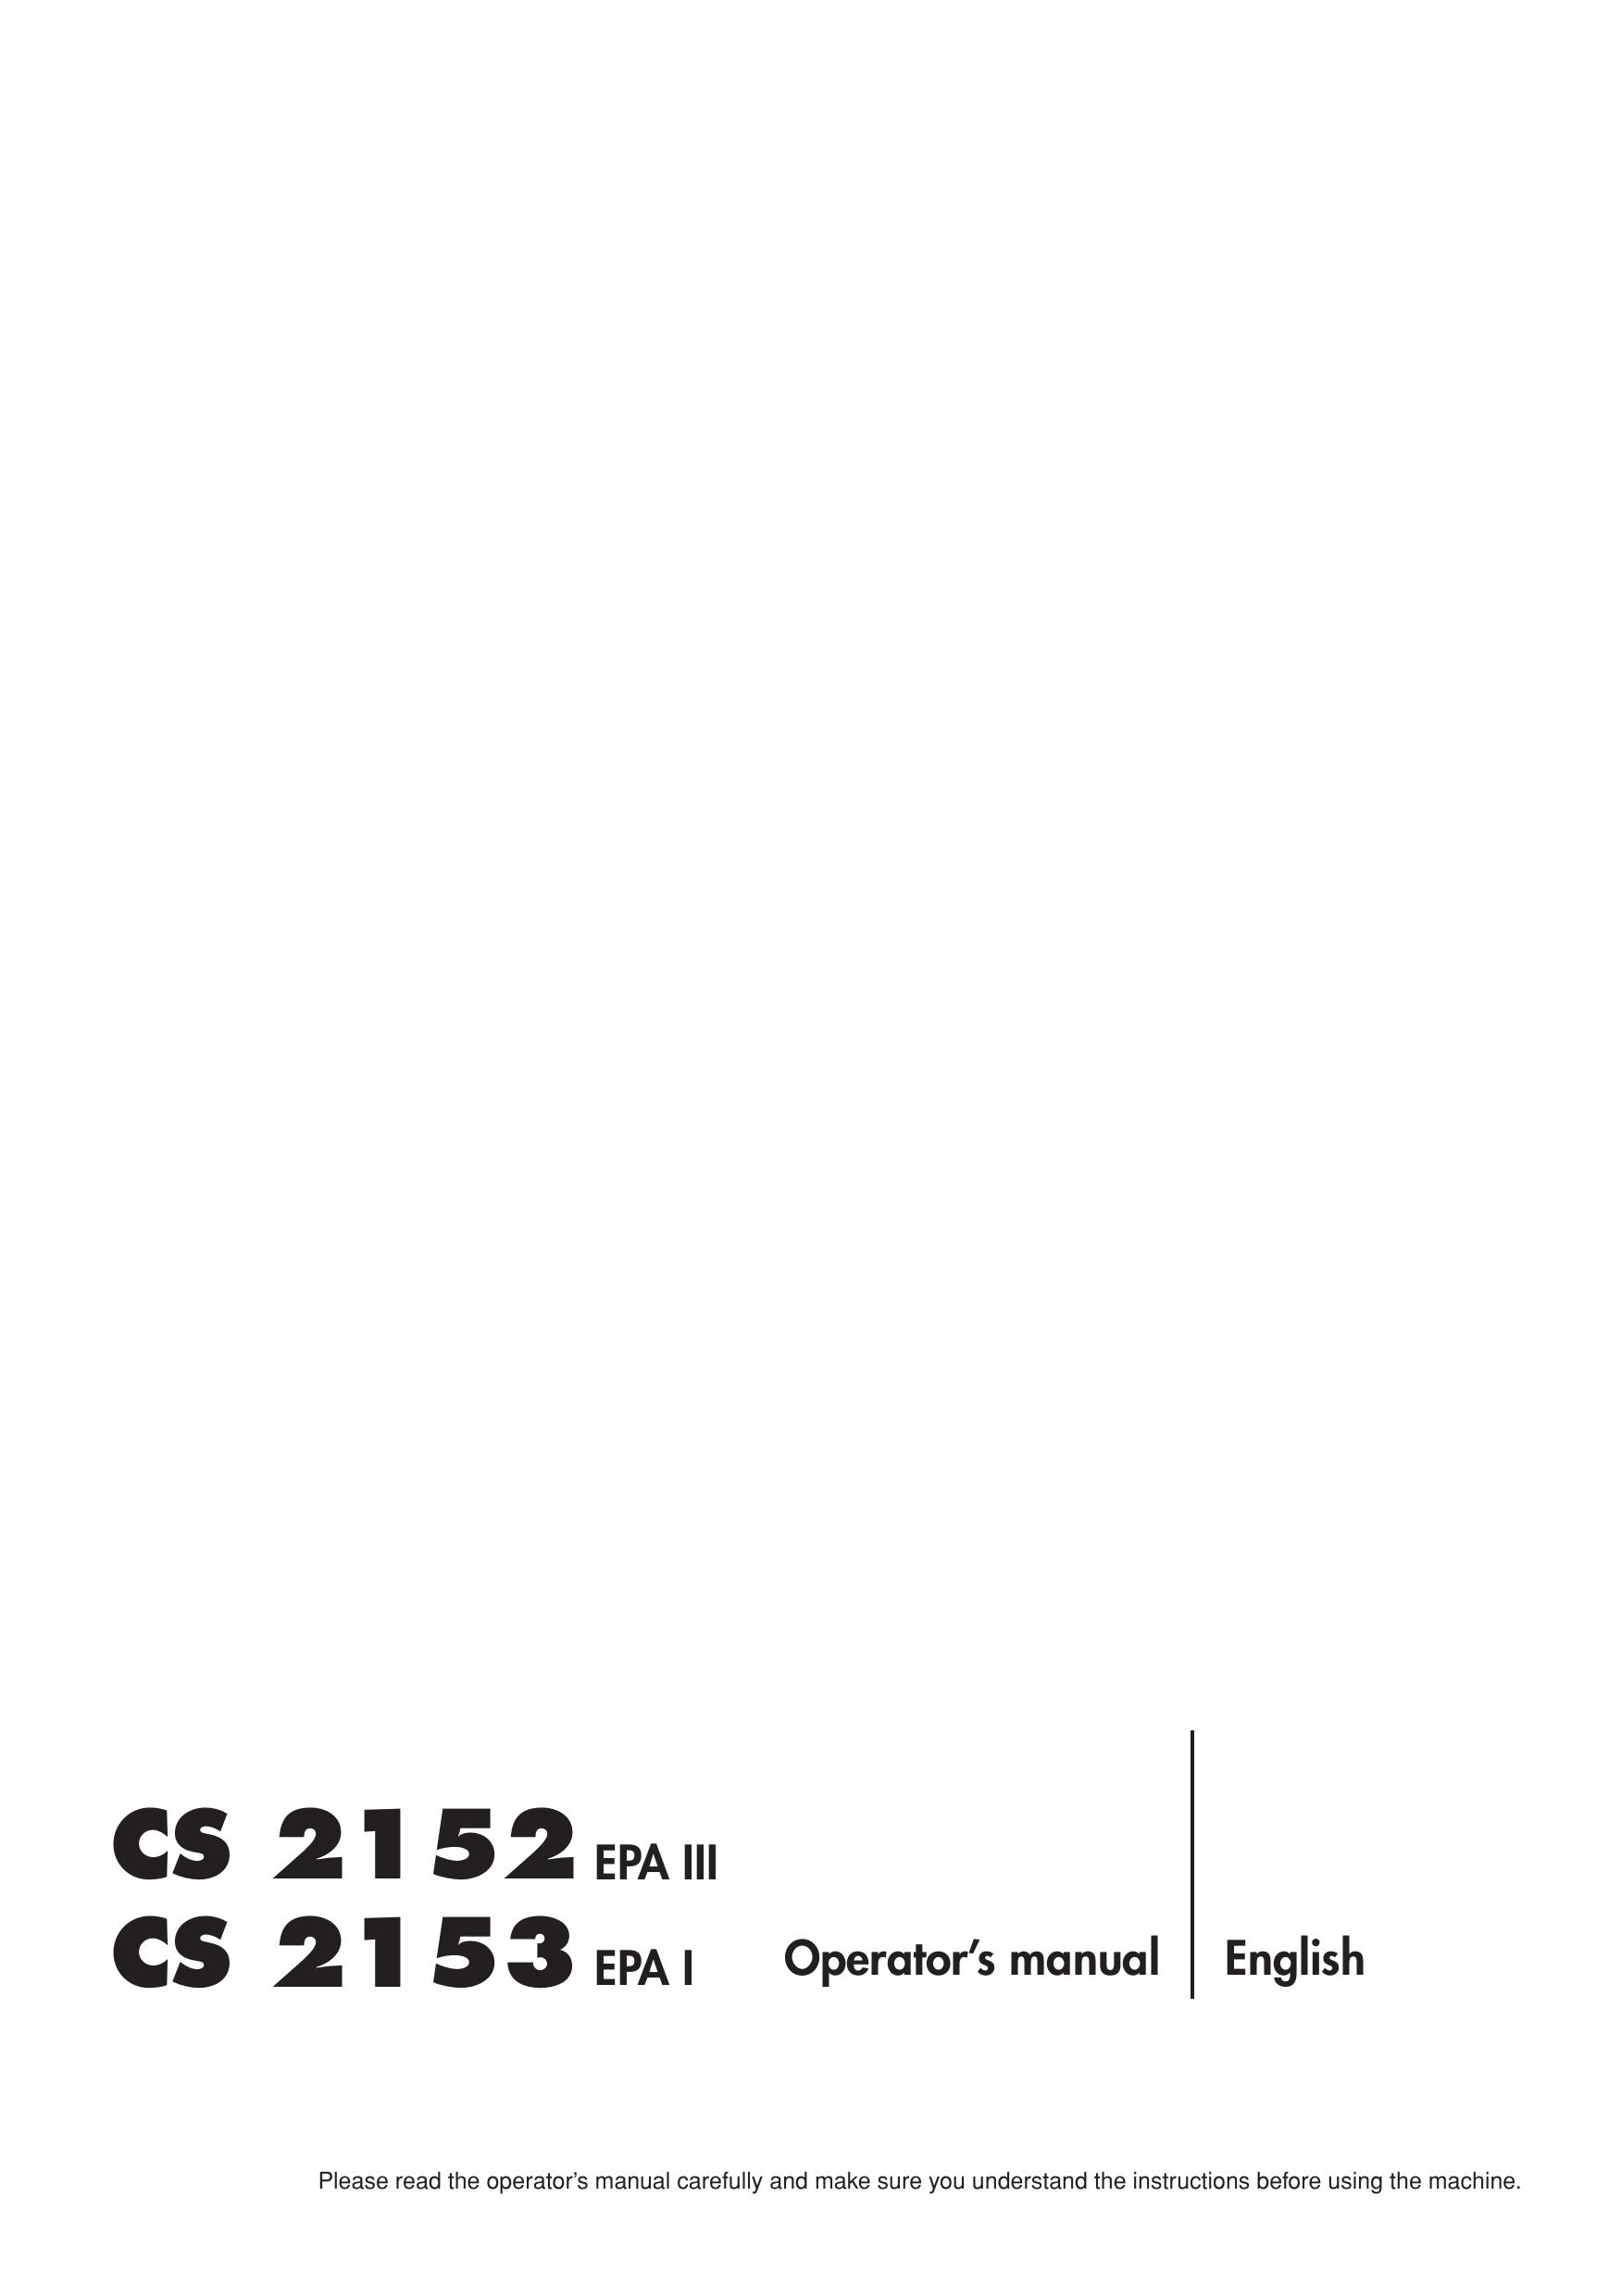 Jonsered CS 2153 EPA I Chainsaw User Manual